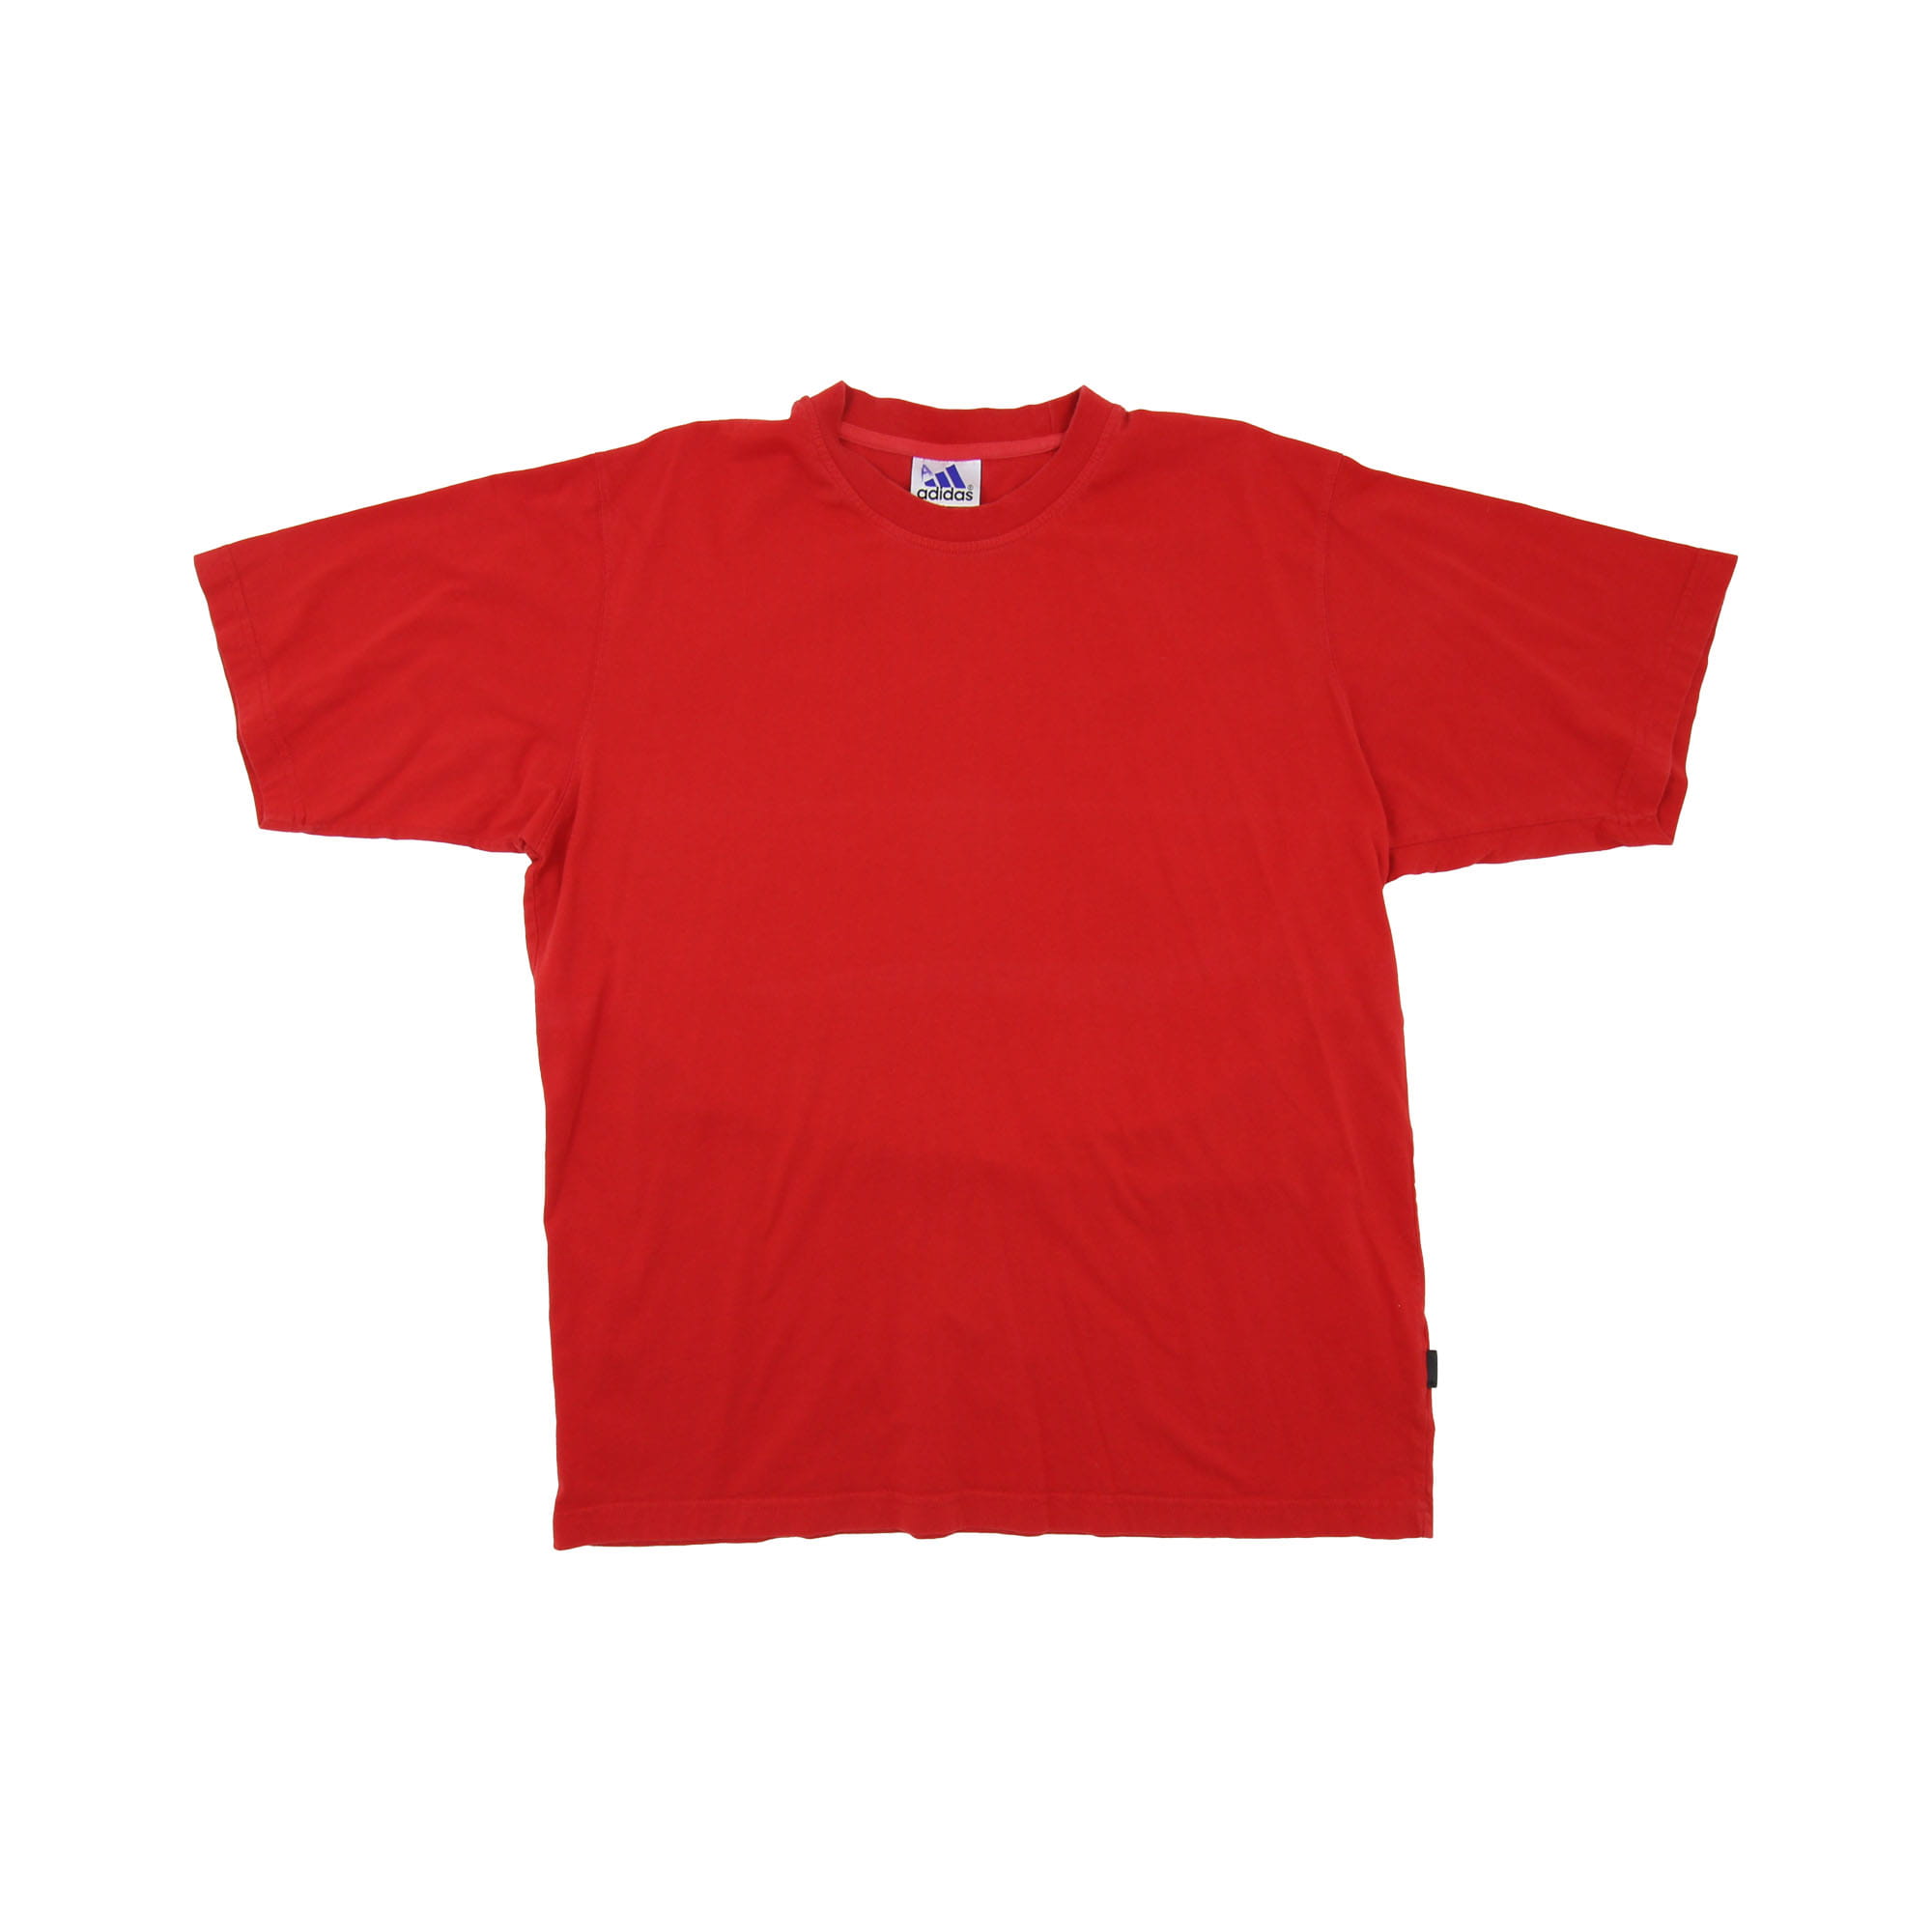 Adidas T-Shirt Red -  L